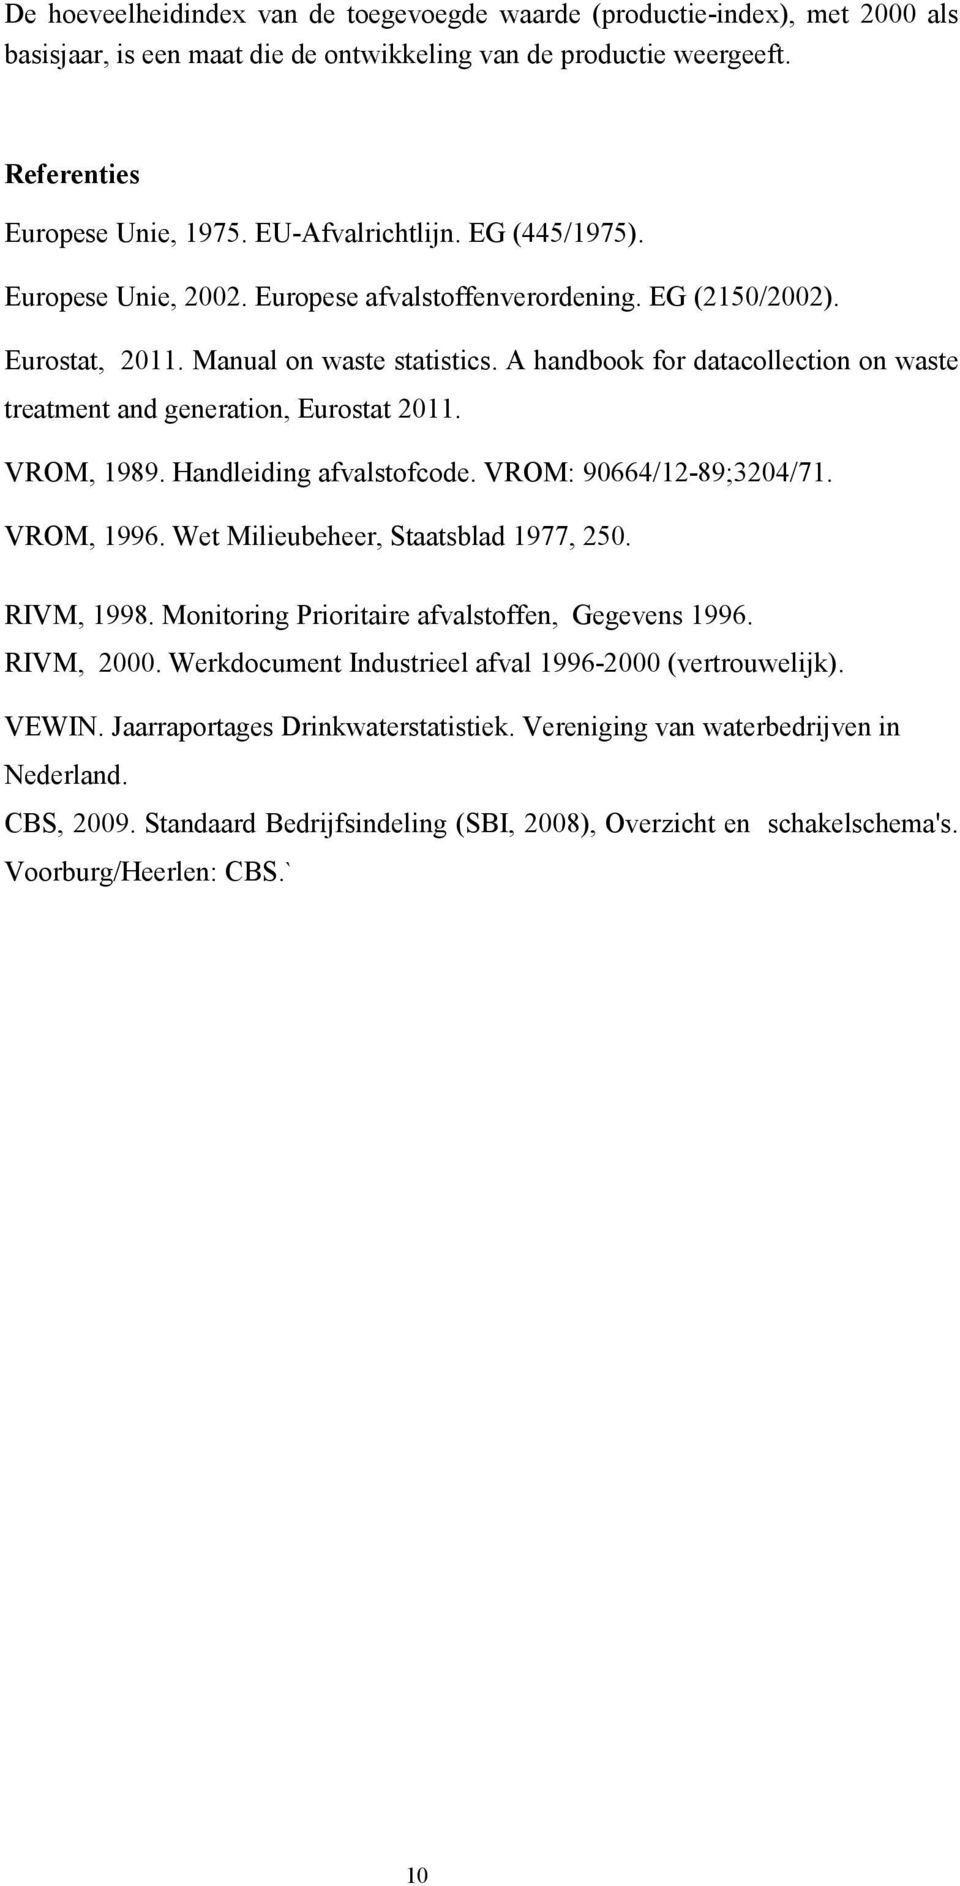 A handbook for datacollection on waste treatment and generation, Eurostat 2011. VROM, 1989. Handleiding afvalstofcode. VROM: 90664/12-89;3204/71. VROM, 1996. Wet Milieubeheer, Staatsblad 1977, 250.